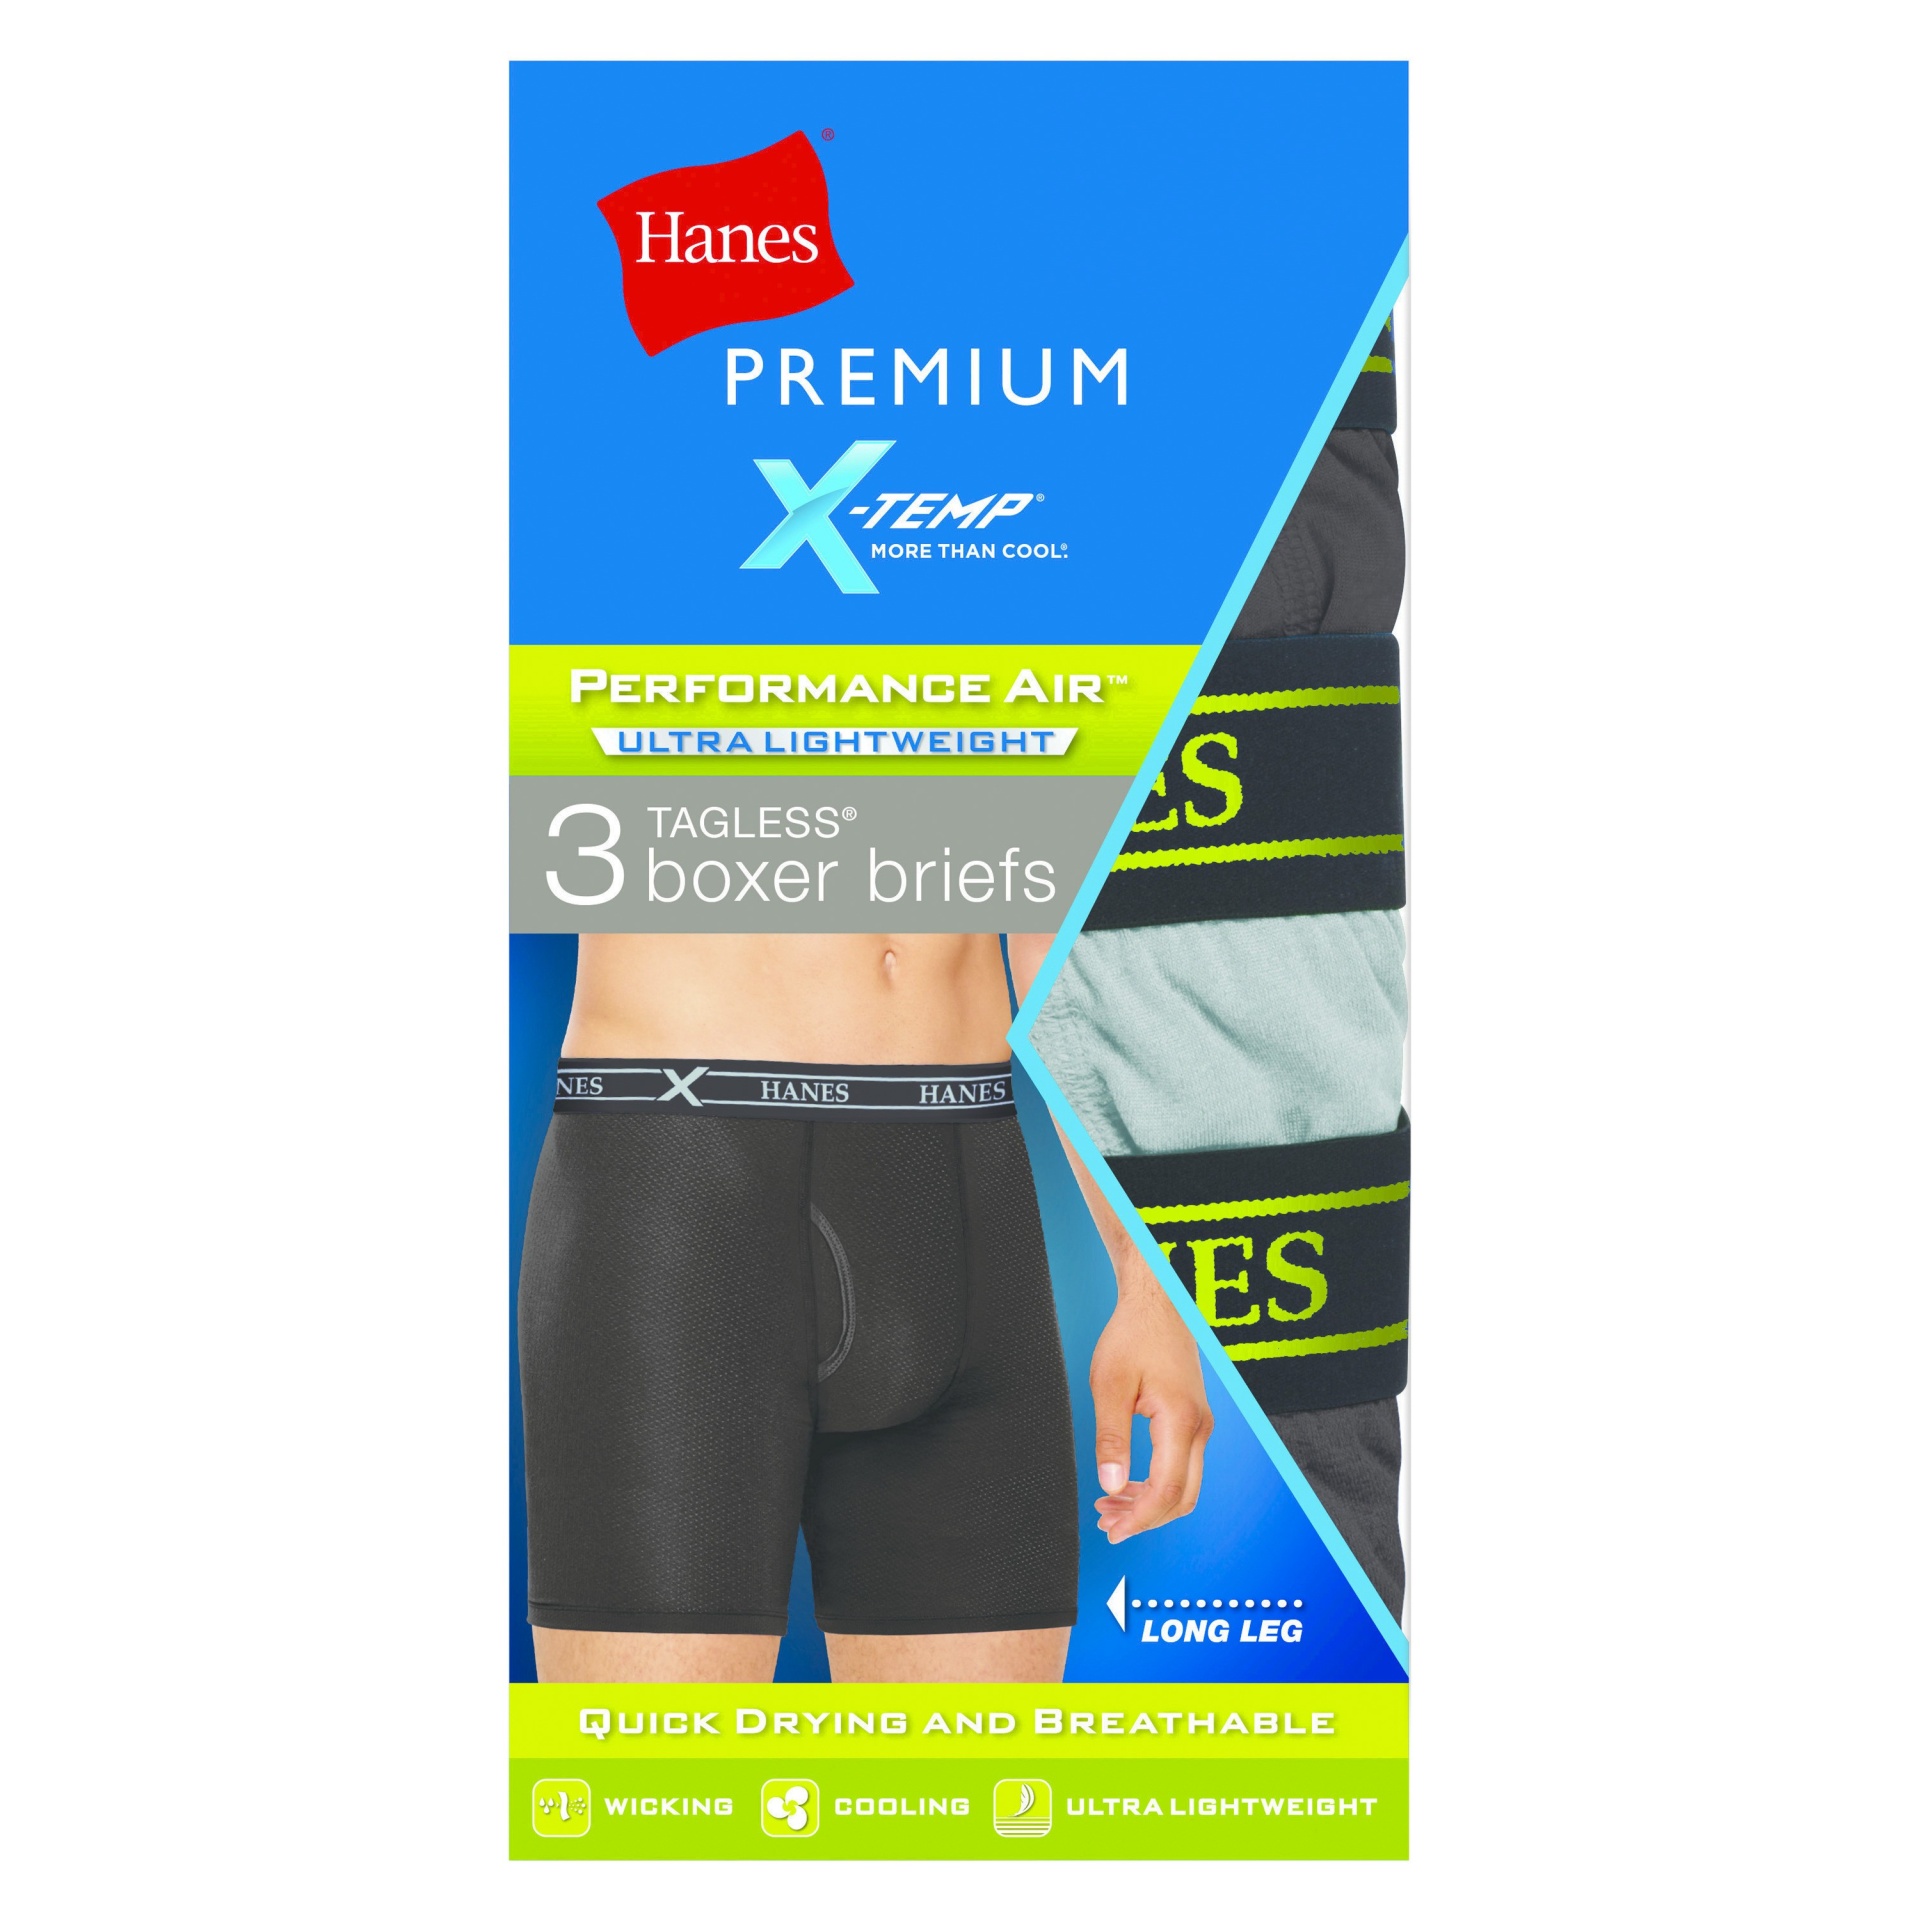 Hanes Premium Men's Performance Ultralight Boxer Briefs Colors Vary - XL 1  ct